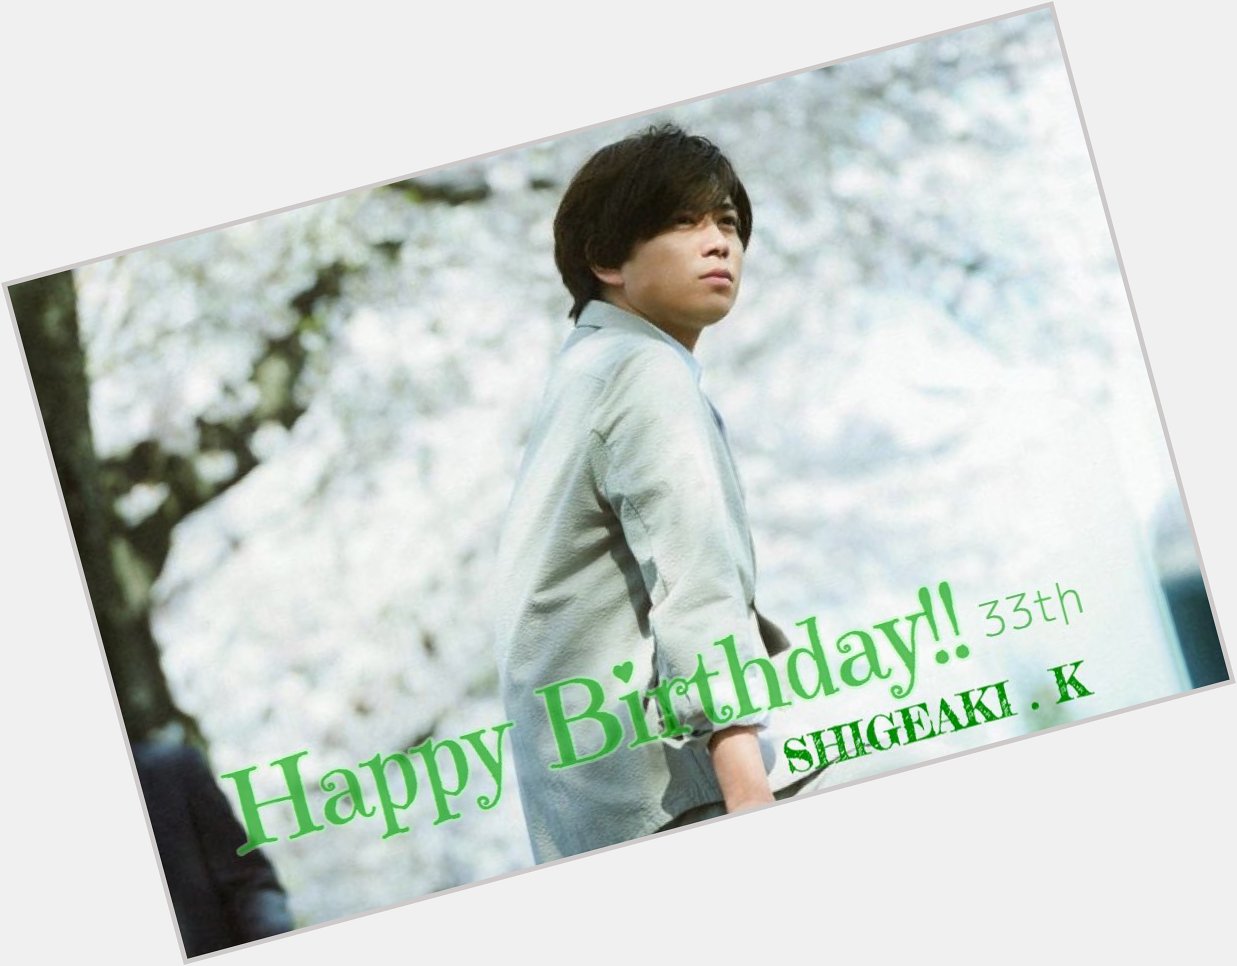  \\Happy Birthday!!/ SHIGEAKI KATO 33th.                         (   )             